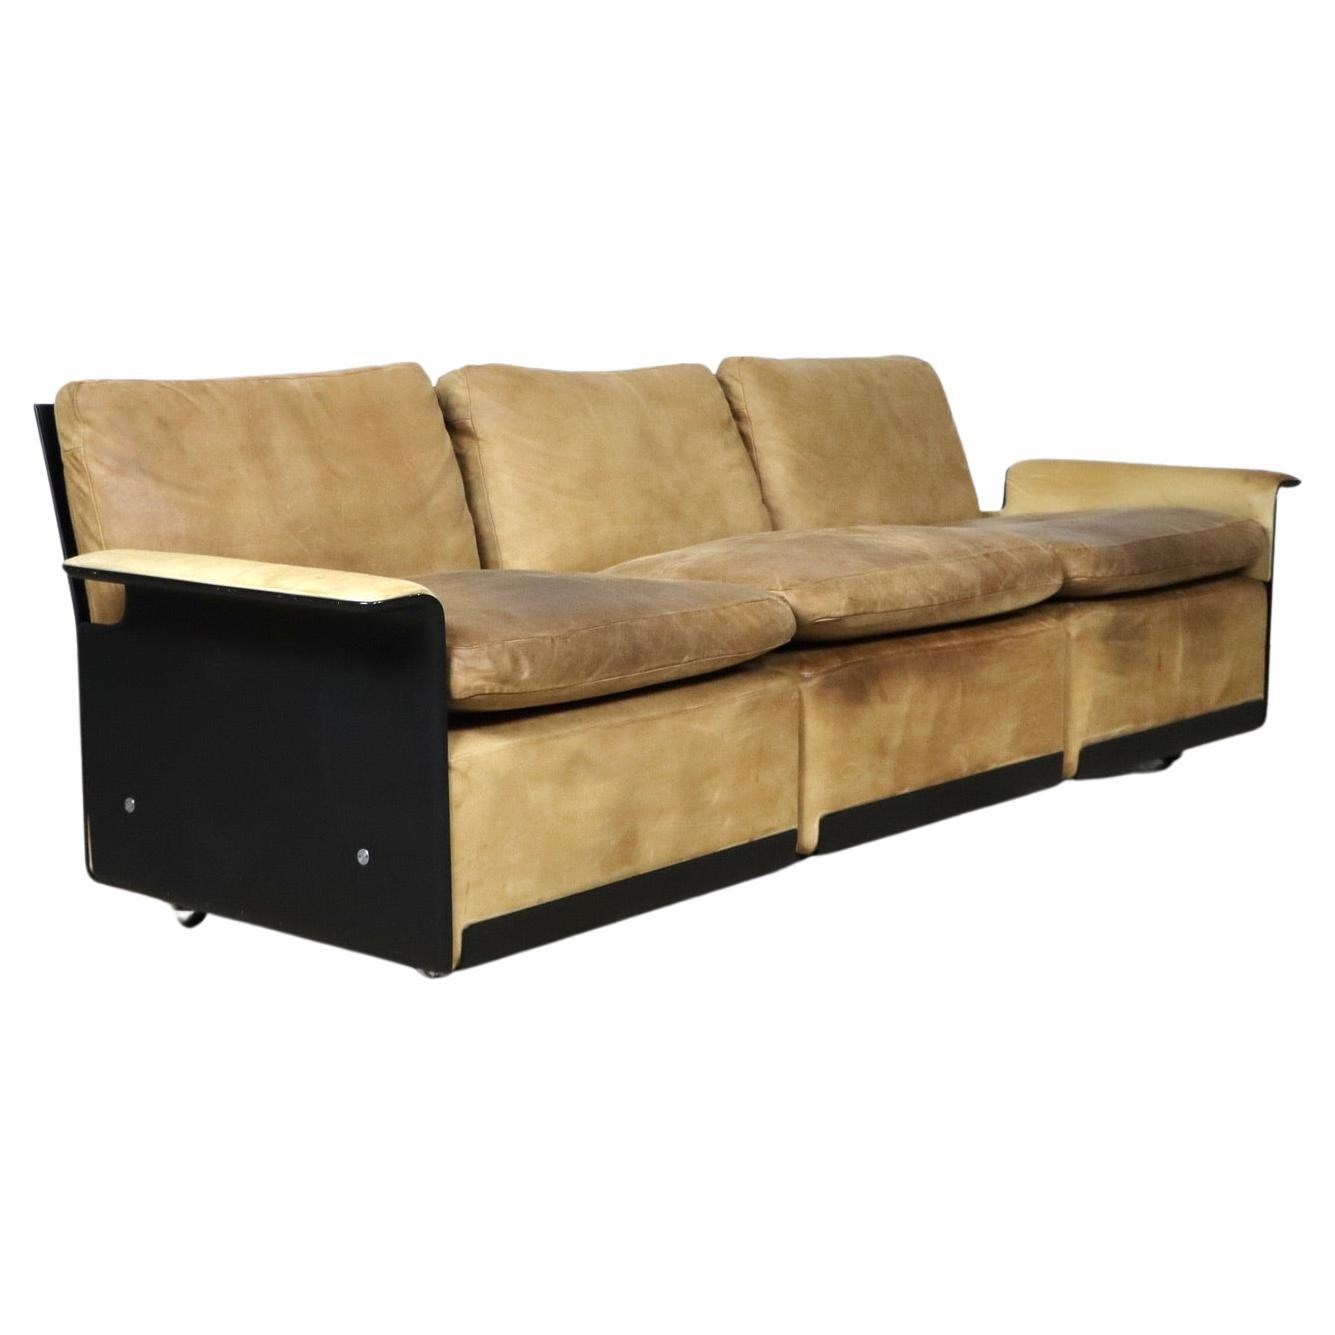 Dieter Rams Cognacfarbenes 3-Sitzer-Sofa aus Leder Modell 620 für Vitsoe, 1980er Jahre